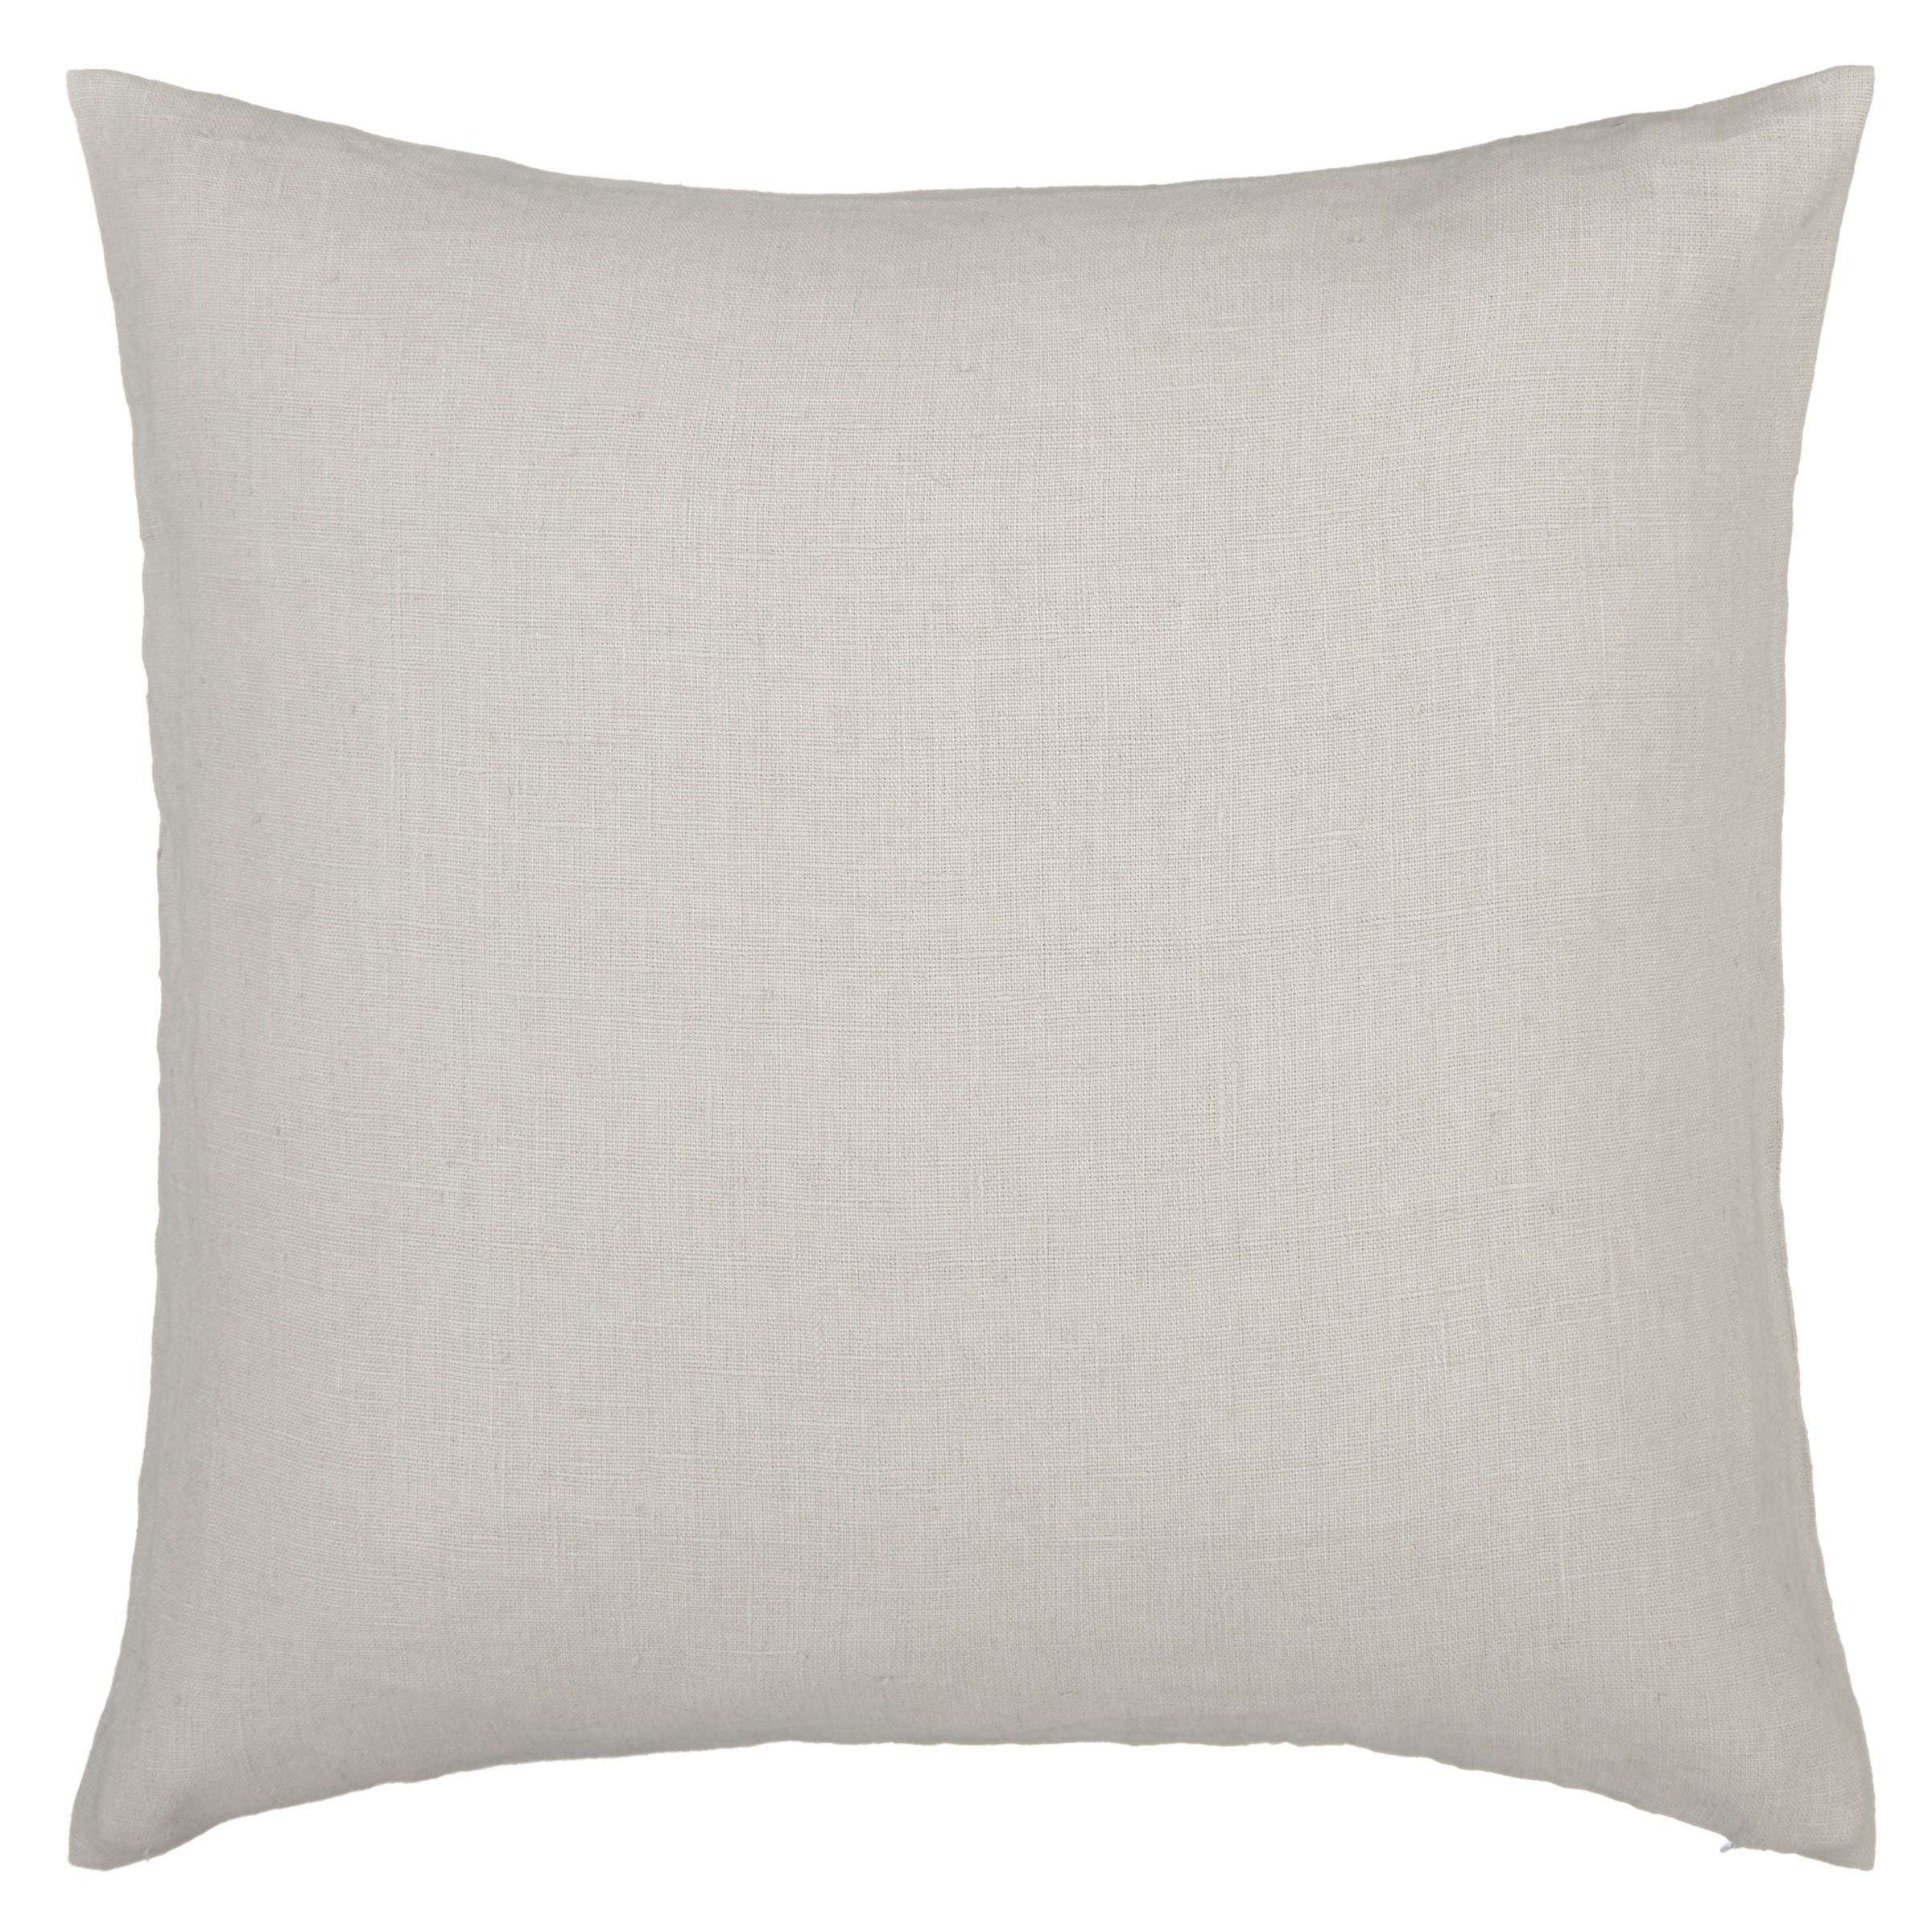 John Lewis Linen Cushion, French Grey